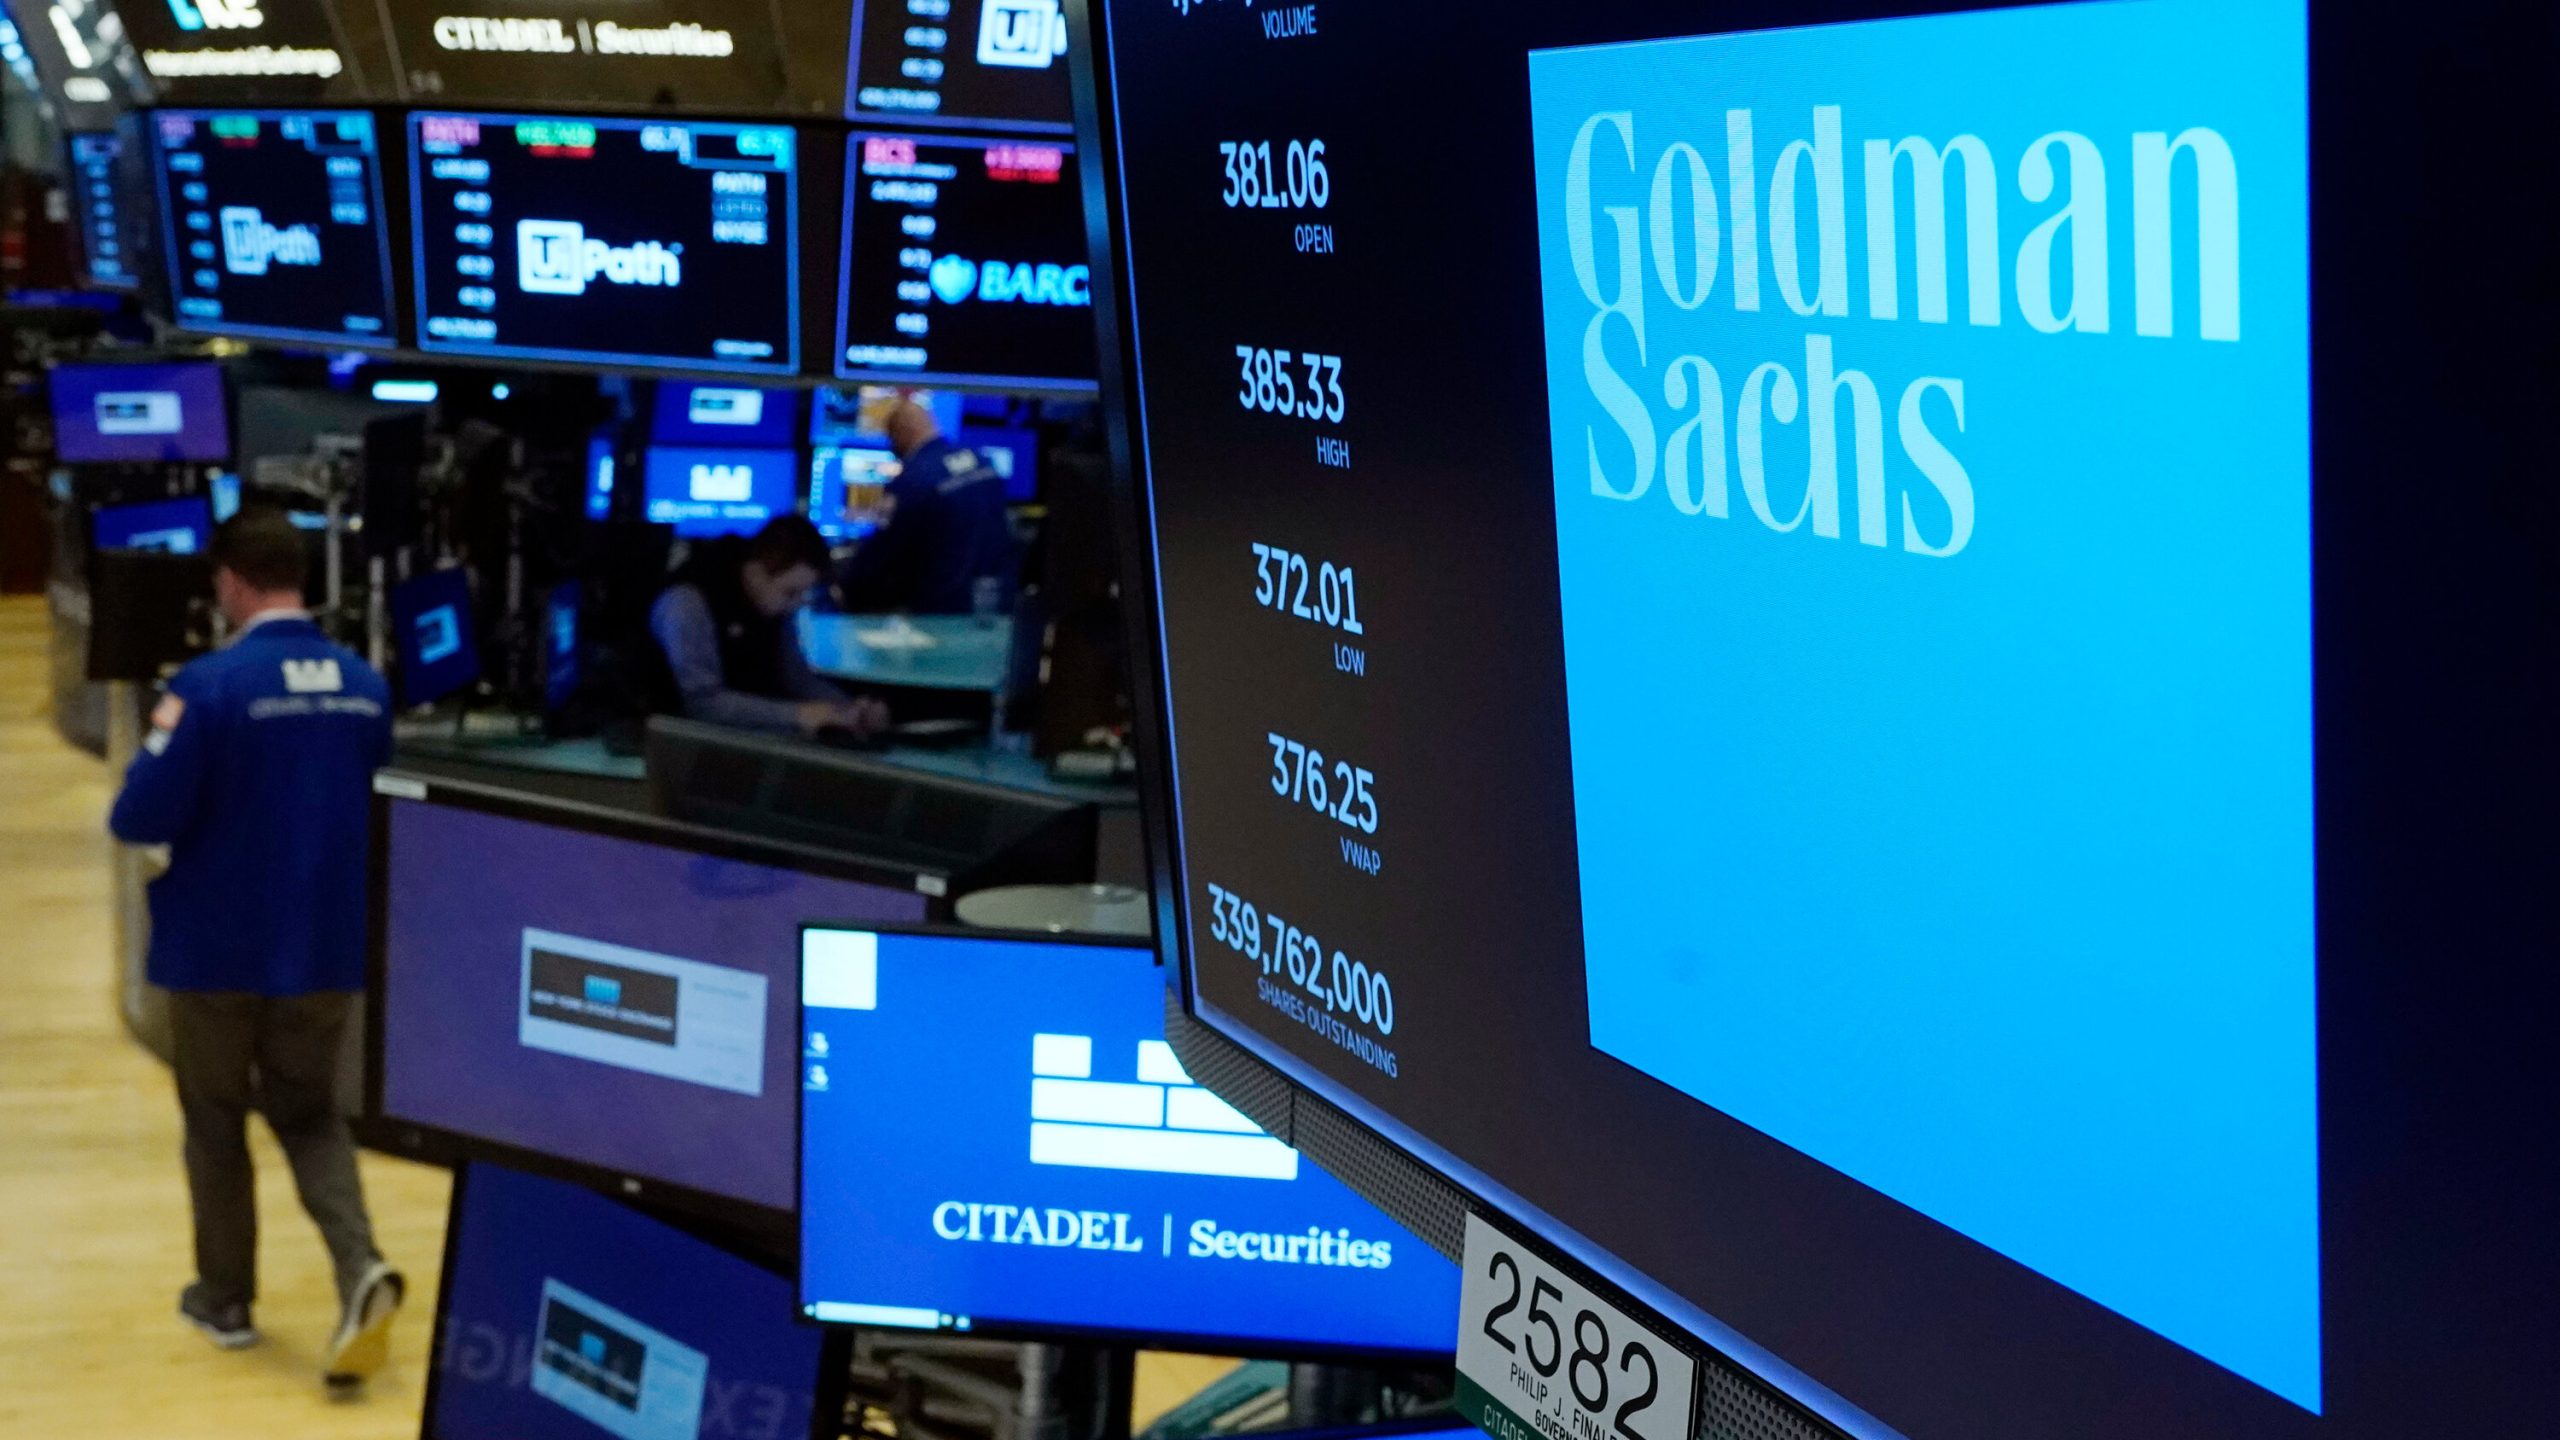 Goldman Sachs Group Under Investigation for Failed SVB Deal